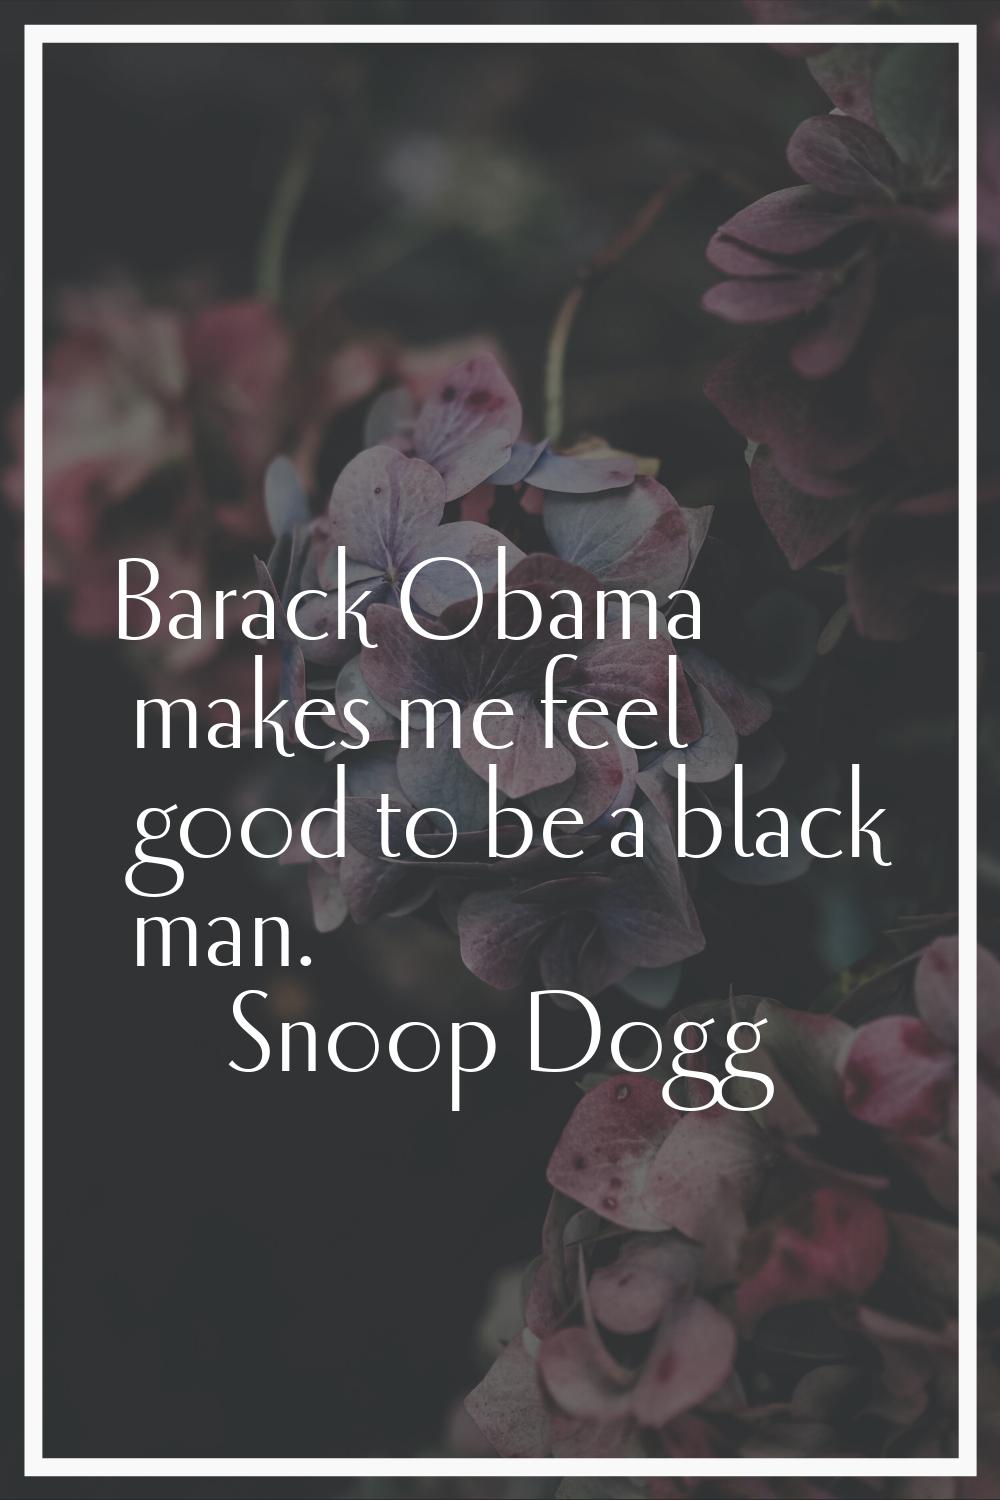 Barack Obama makes me feel good to be a black man.